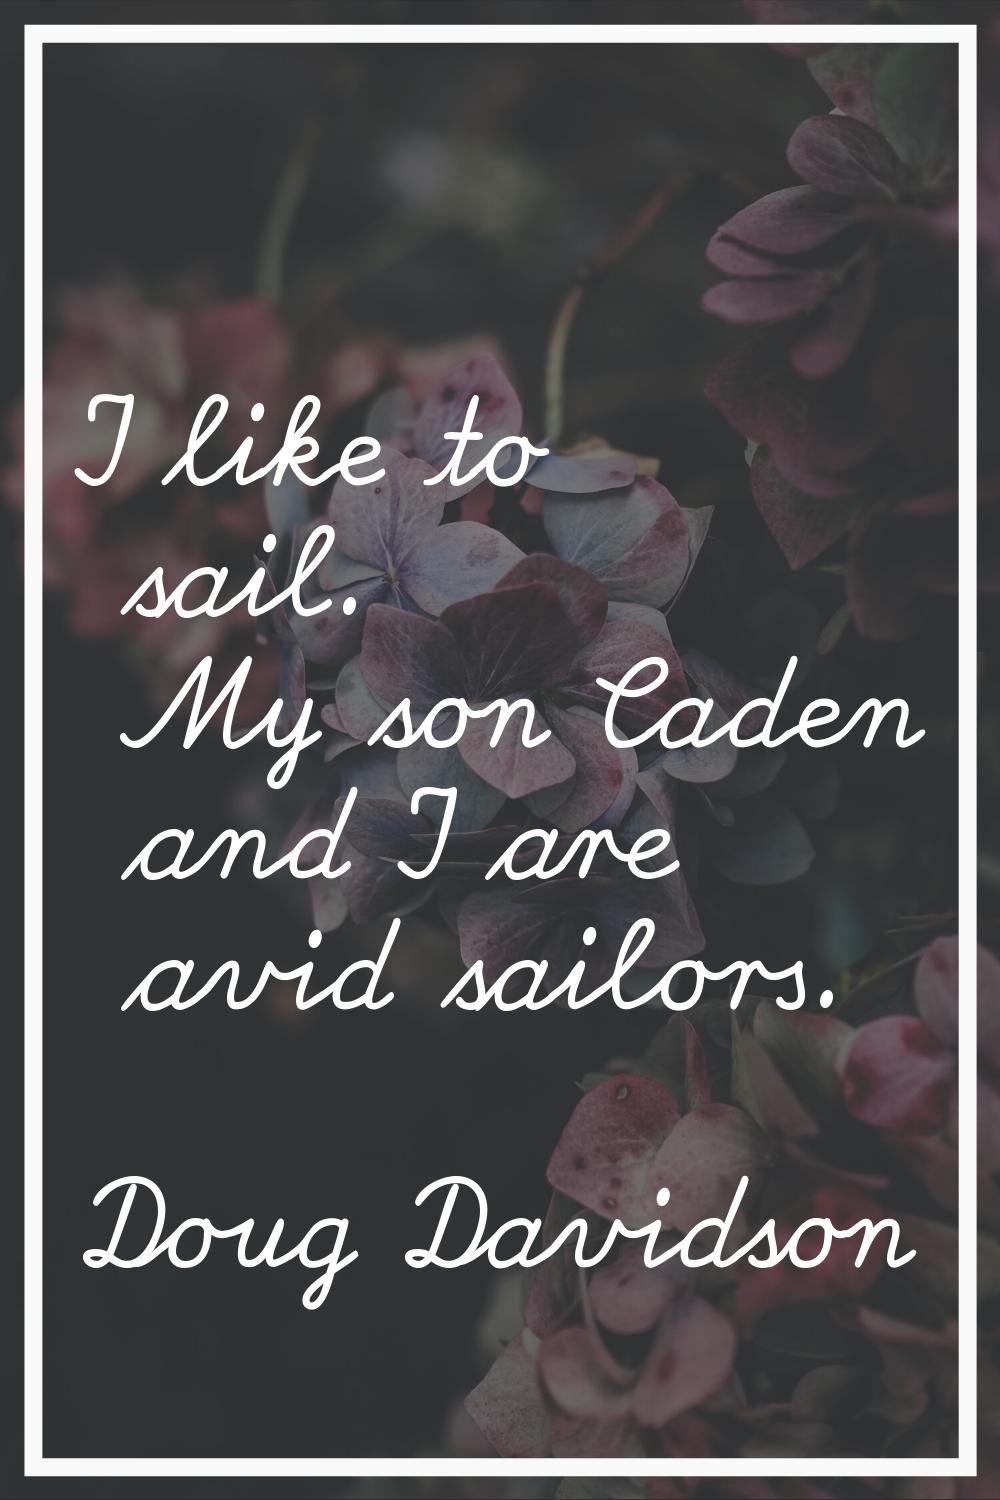 I like to sail. My son Caden and I are avid sailors.